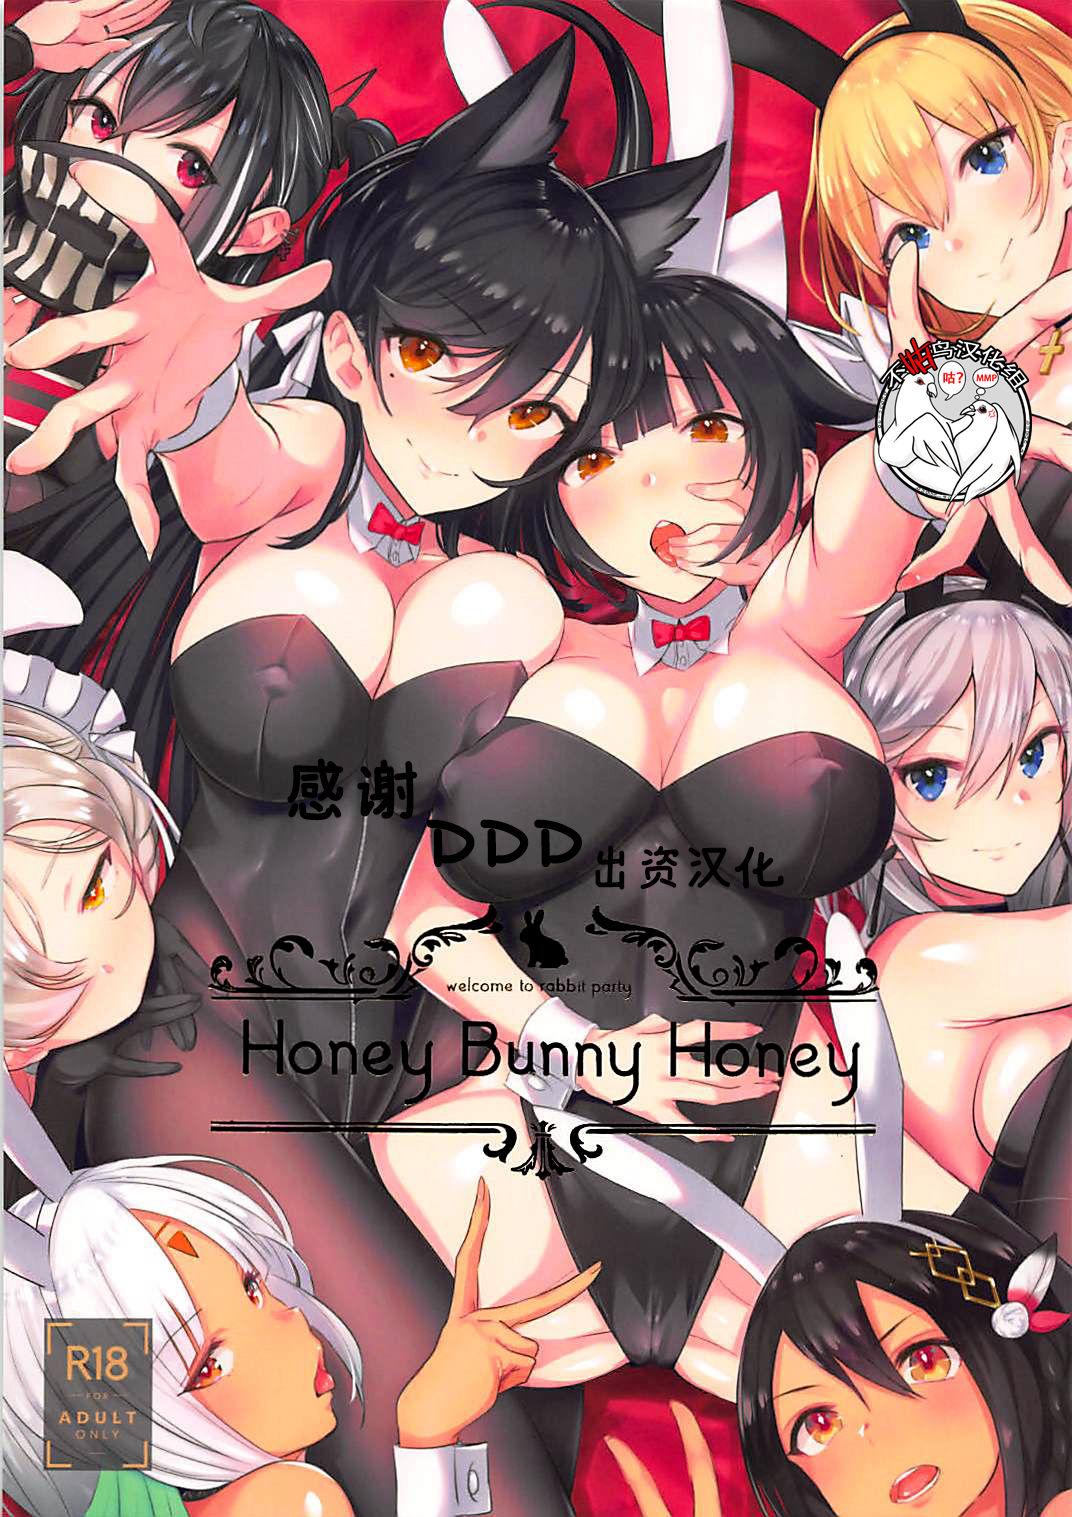 Honey Bunny Honey 0